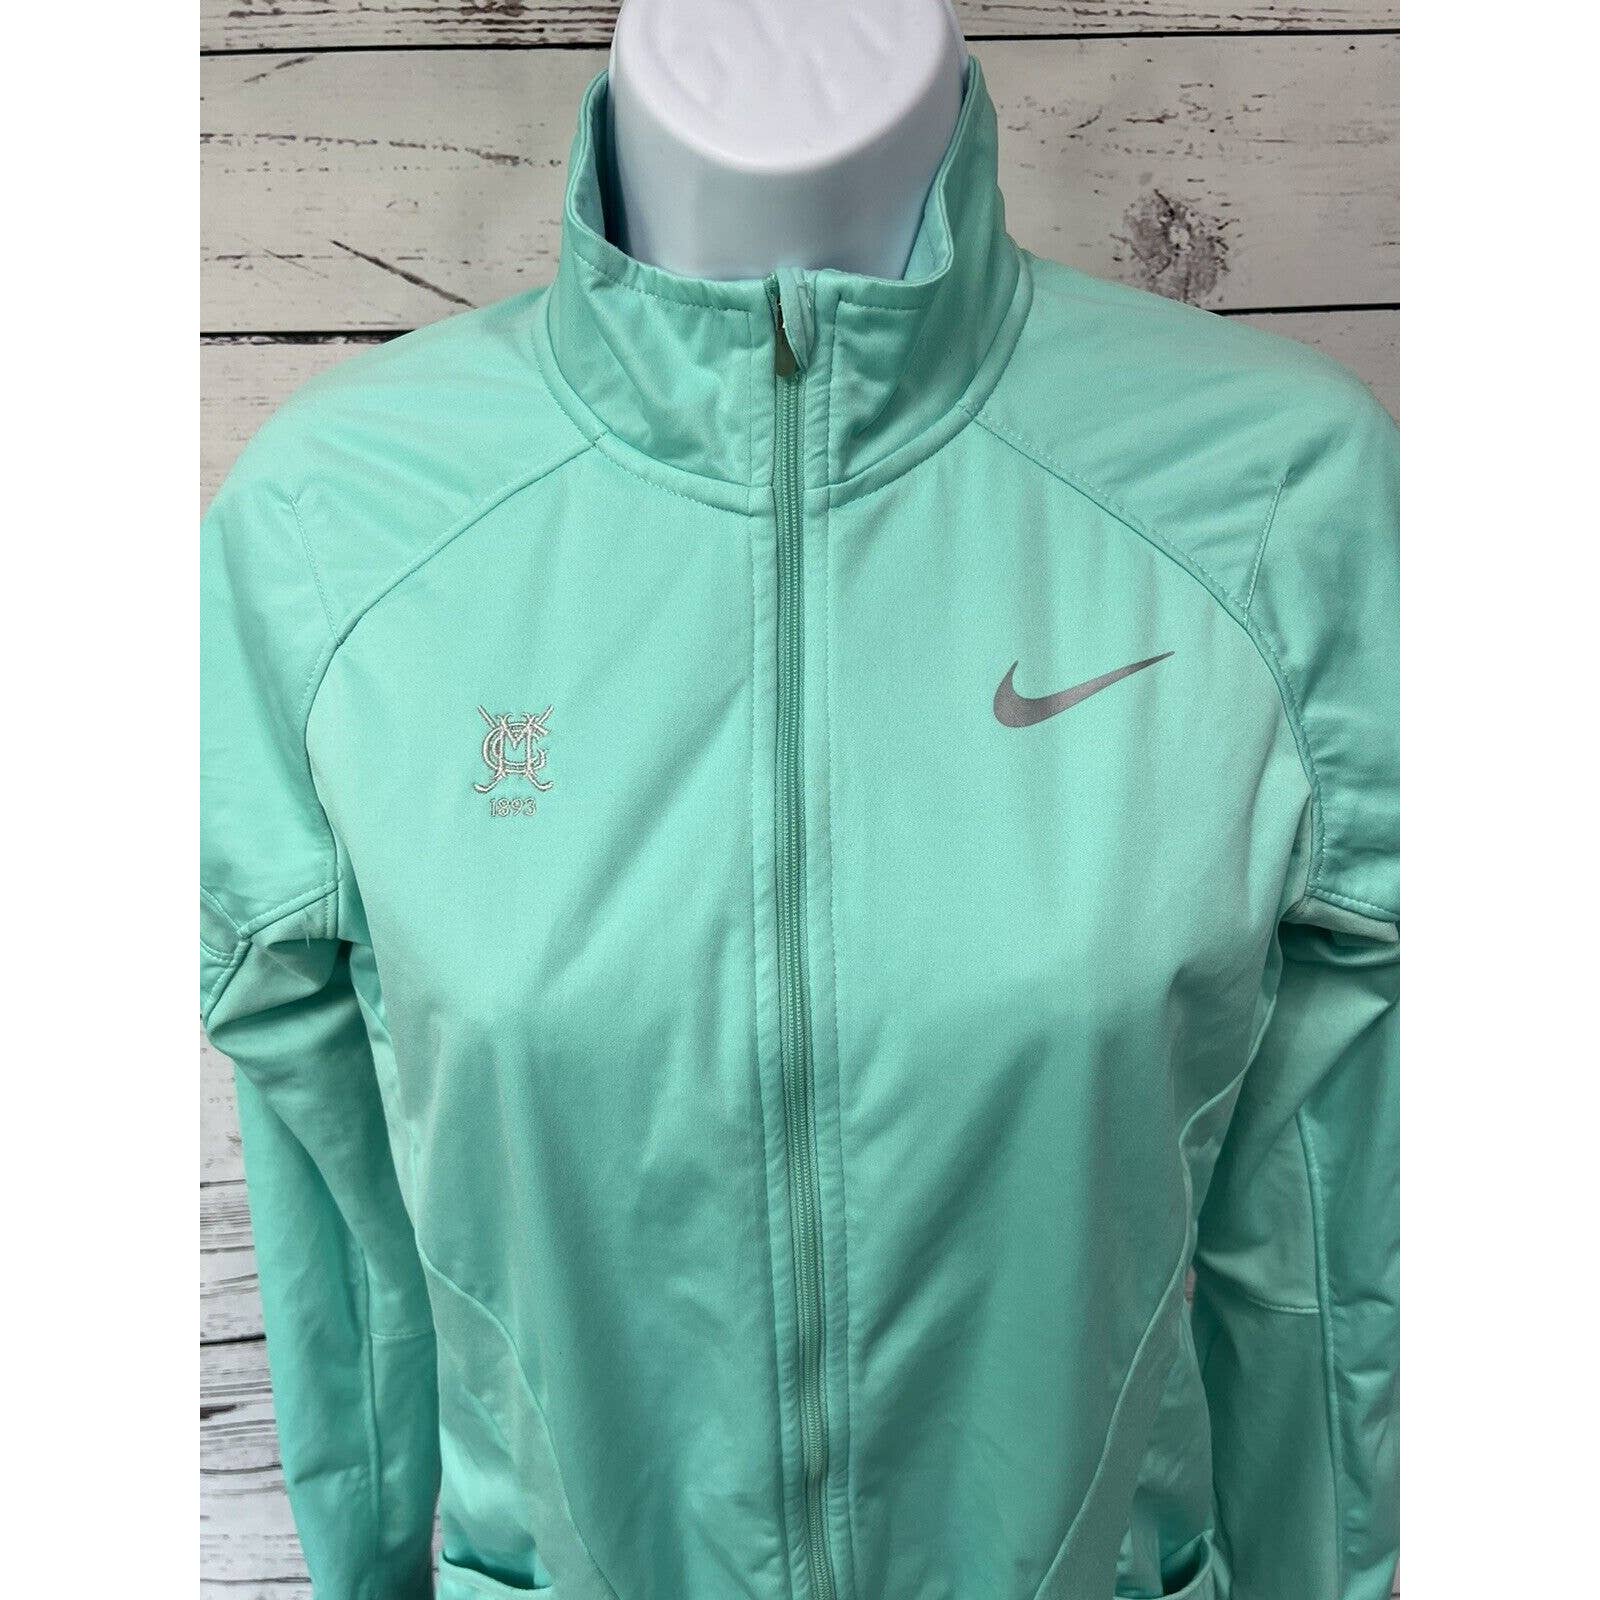 Nike Full Zip Running Jacket Women’s Small Turquoise Green Reflectors Thumb Hole